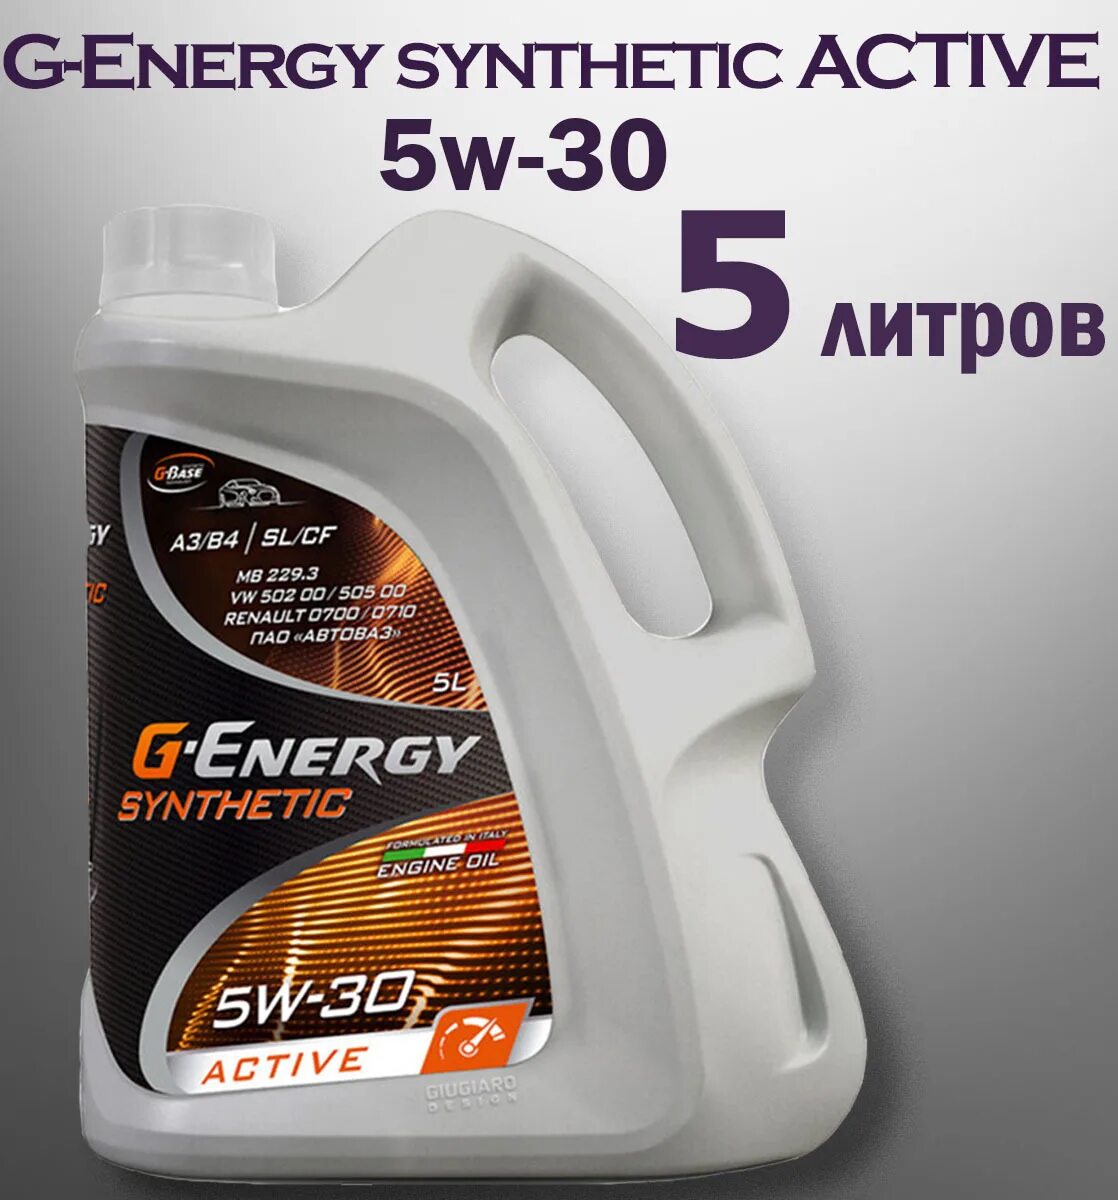 Масло g-Energy Syntetic Activ 5w30. G-Energy Synthetic Active 5w-30. G Energy 5w30 синтетика. Масло g Energy Synthetic Active 5w30. Масло g energy synthetic 5w 30